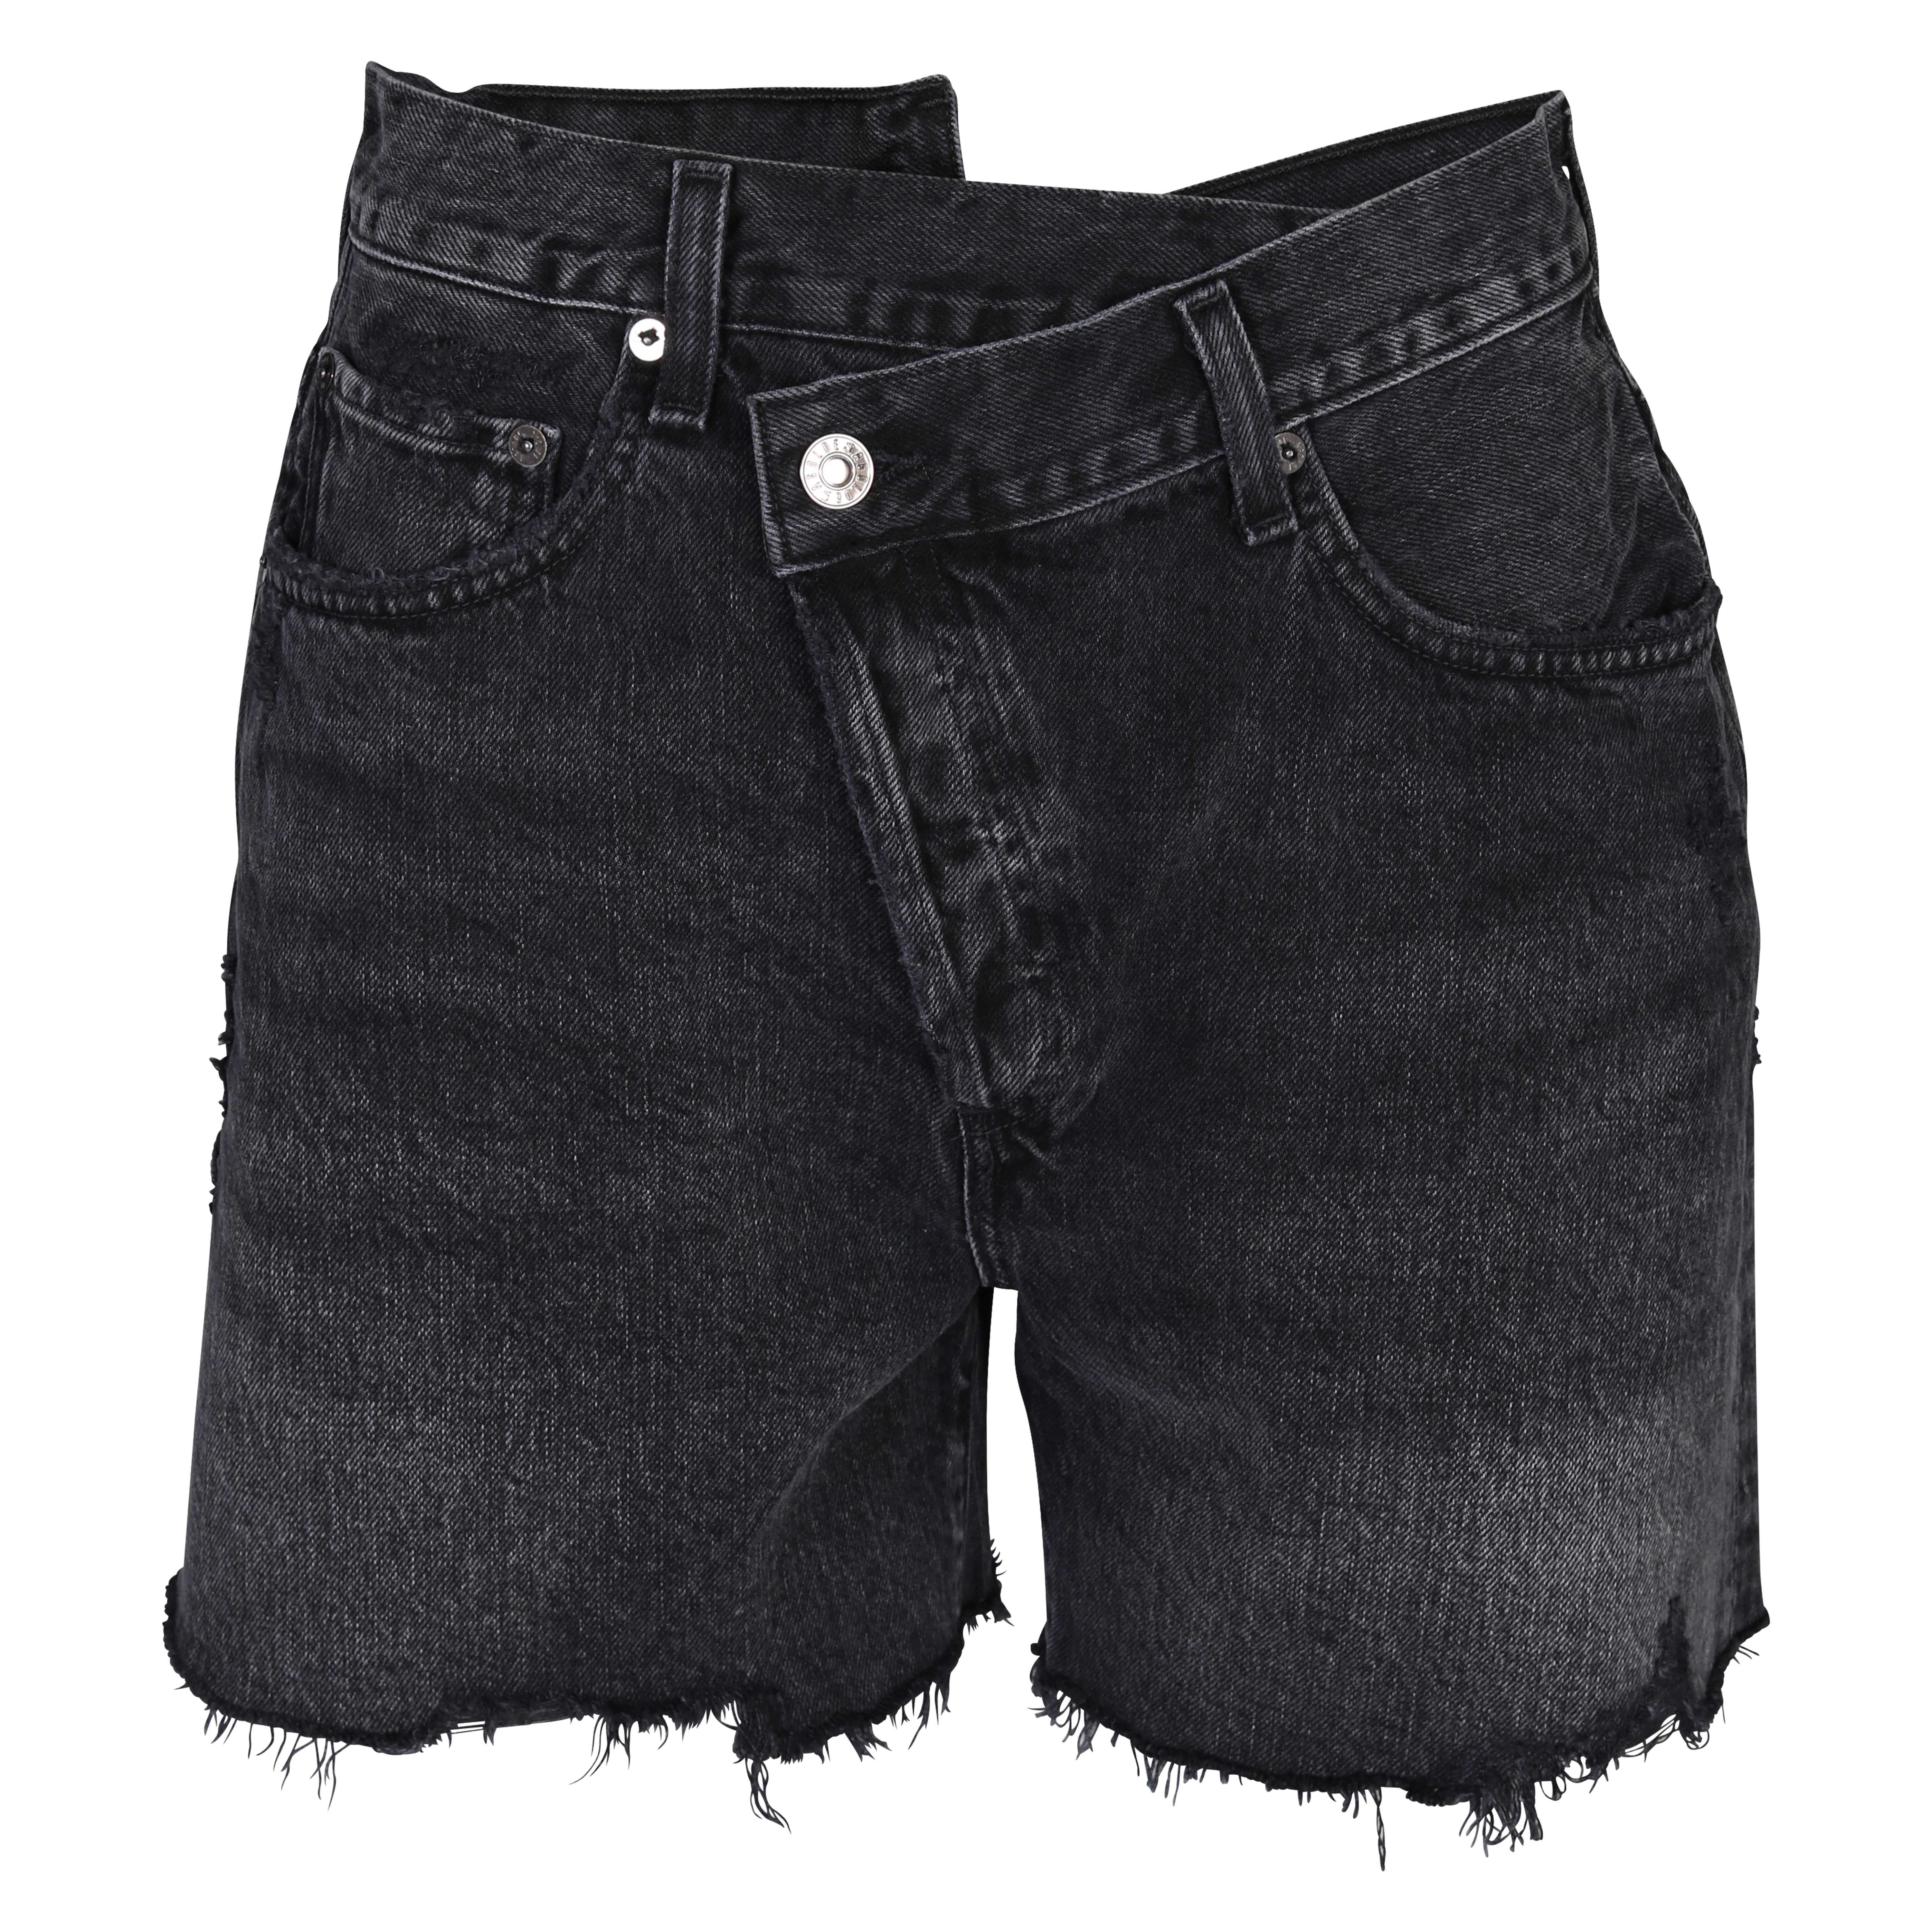 Agolde Jeans Shorts Criss Cross Black Hitchhike Washing